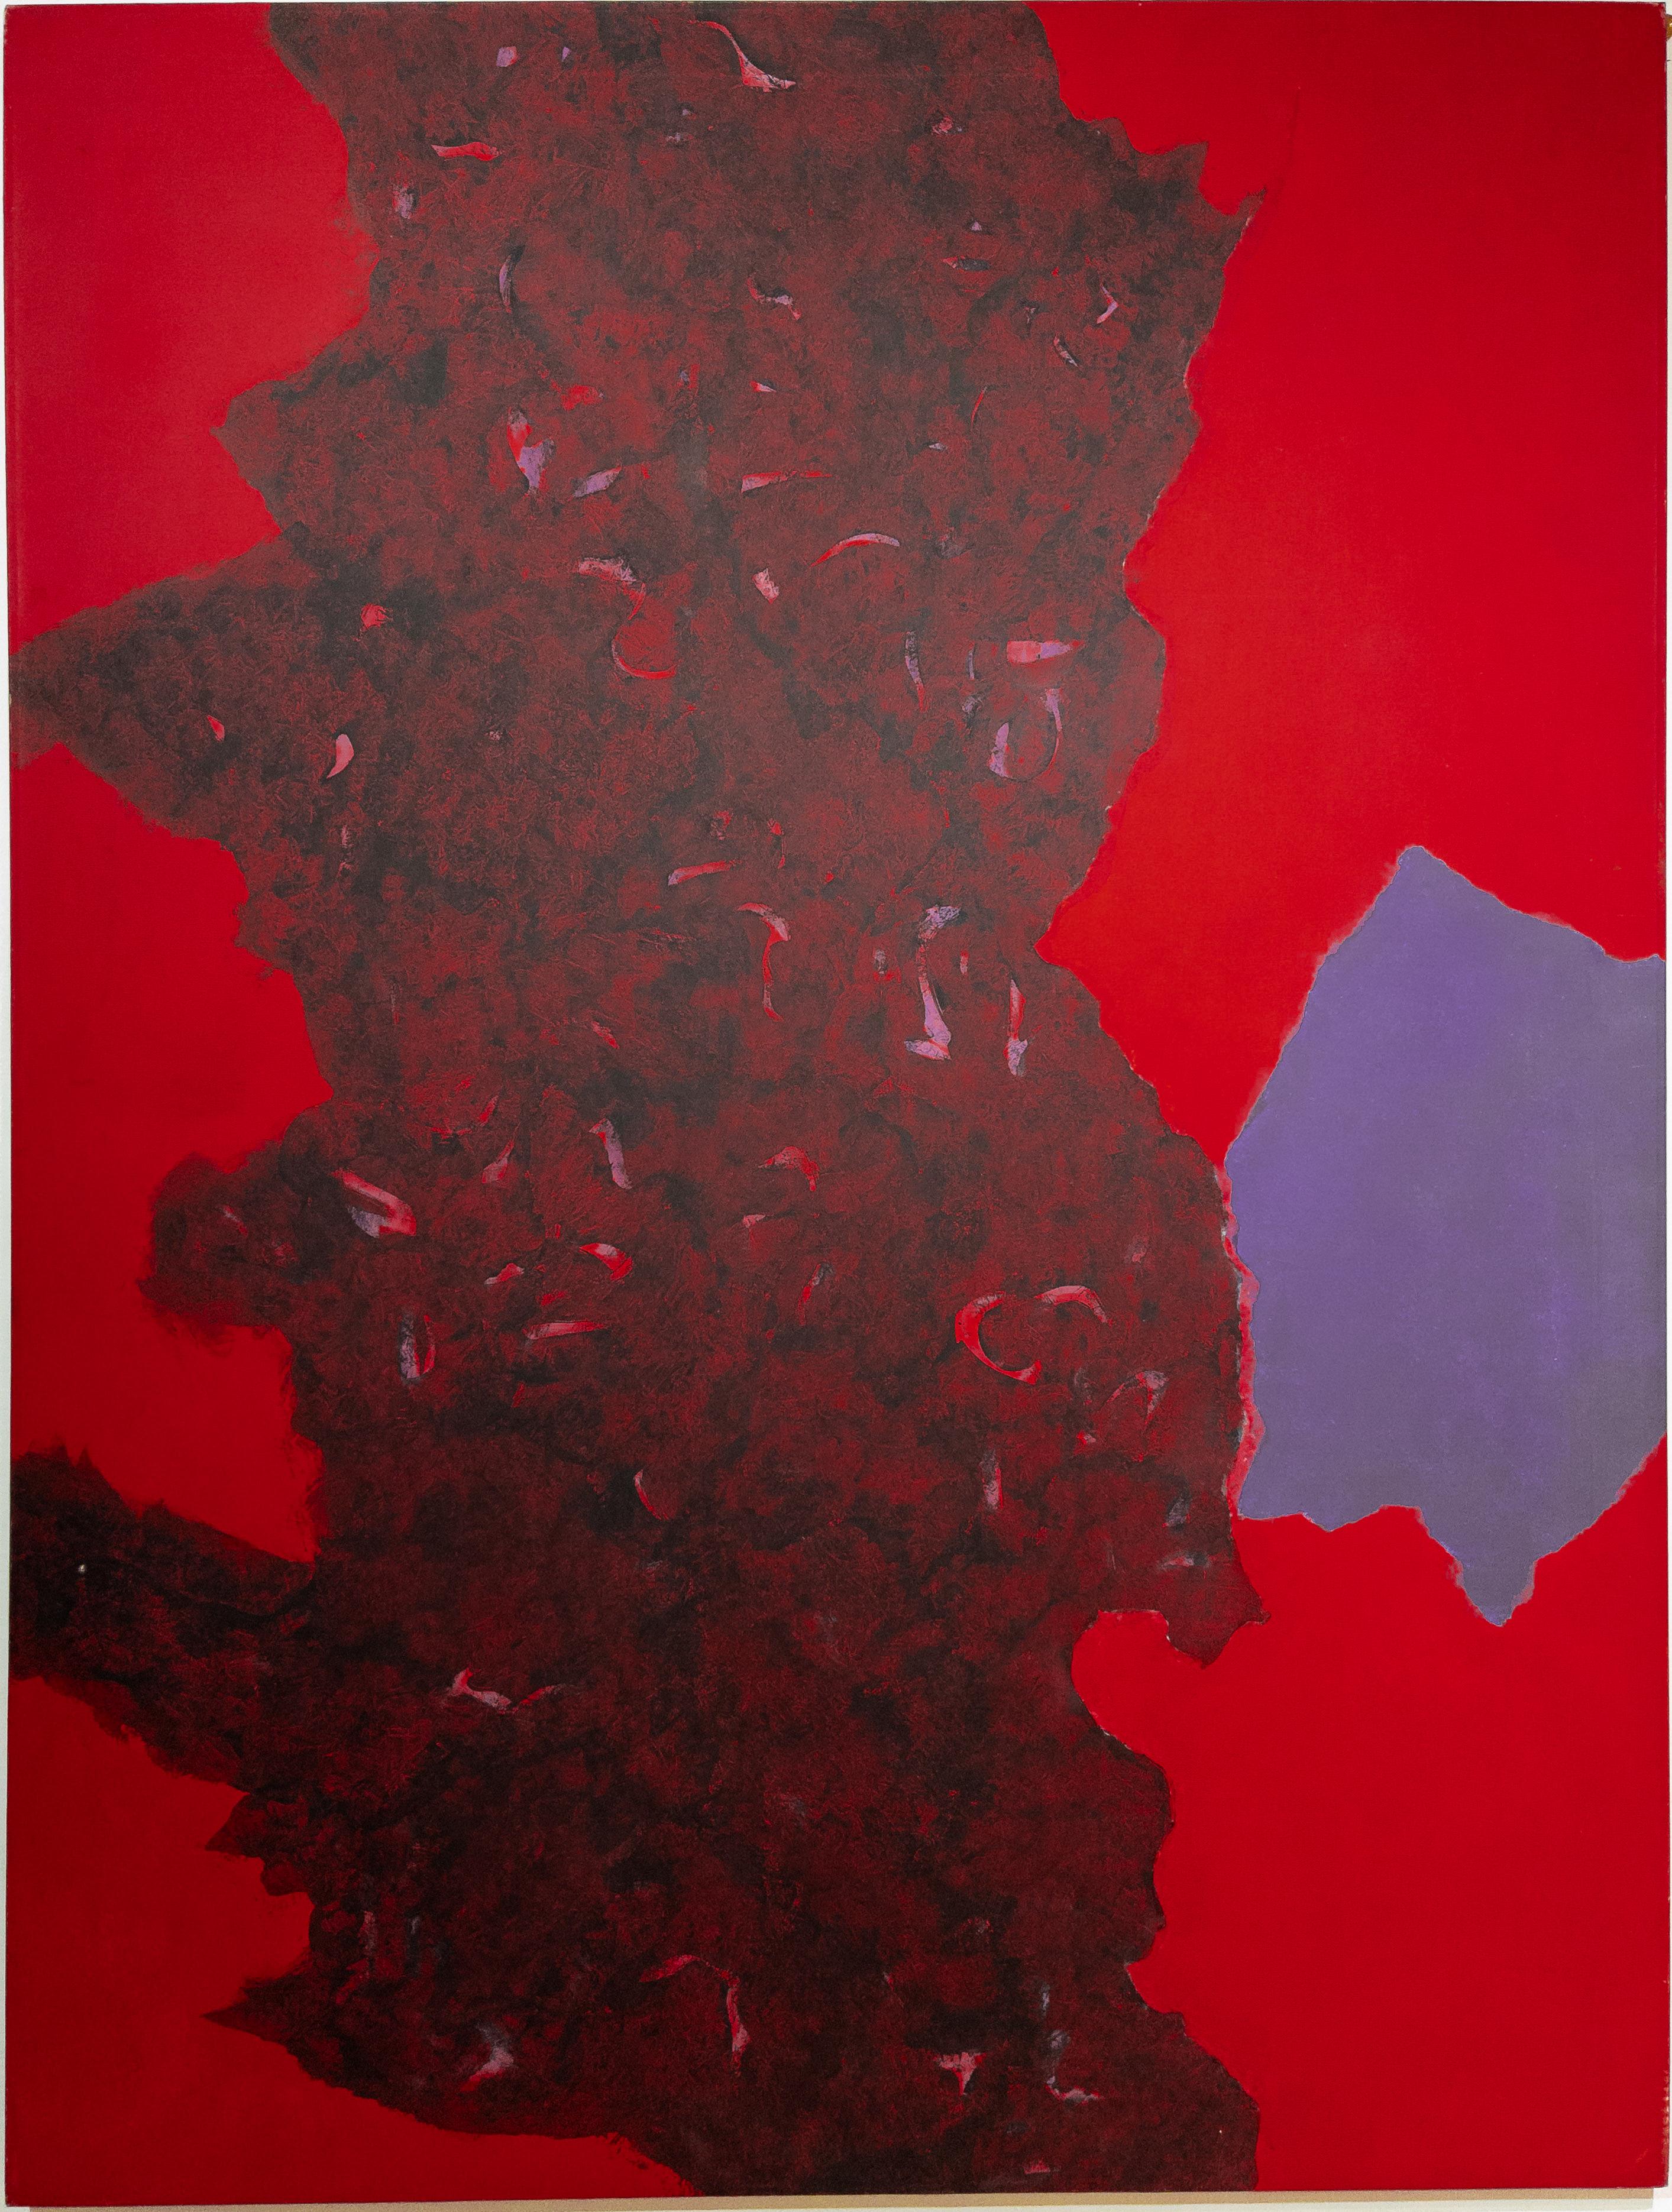 Abstract Painting Theodoros Stamos - Série Burning Bush de Jérusalem